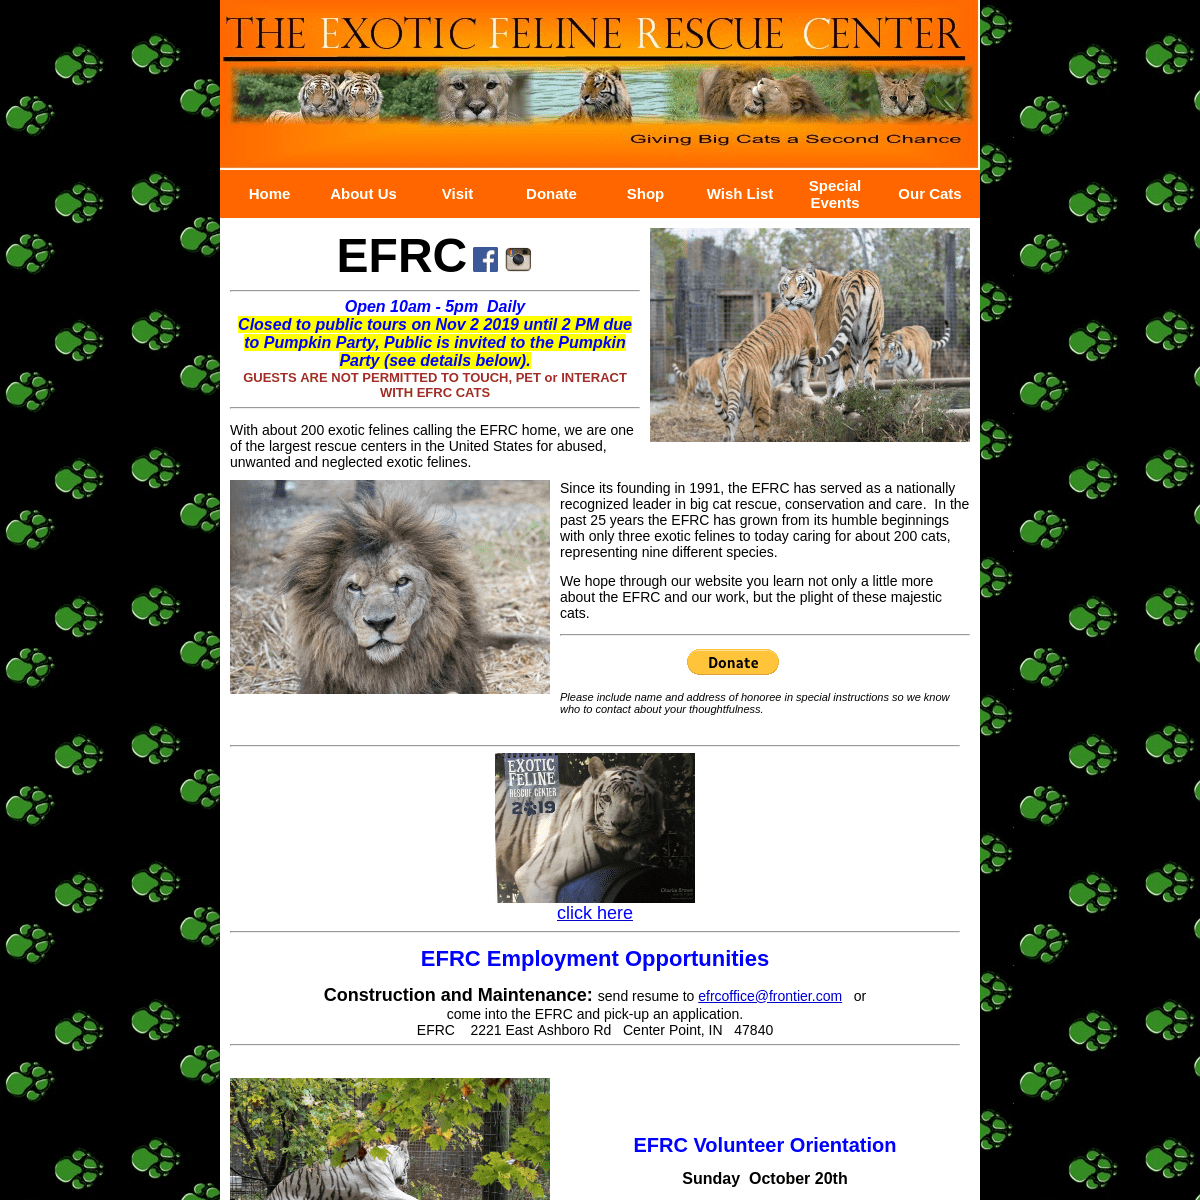 A complete backup of exoticfelinerescuecenter.org